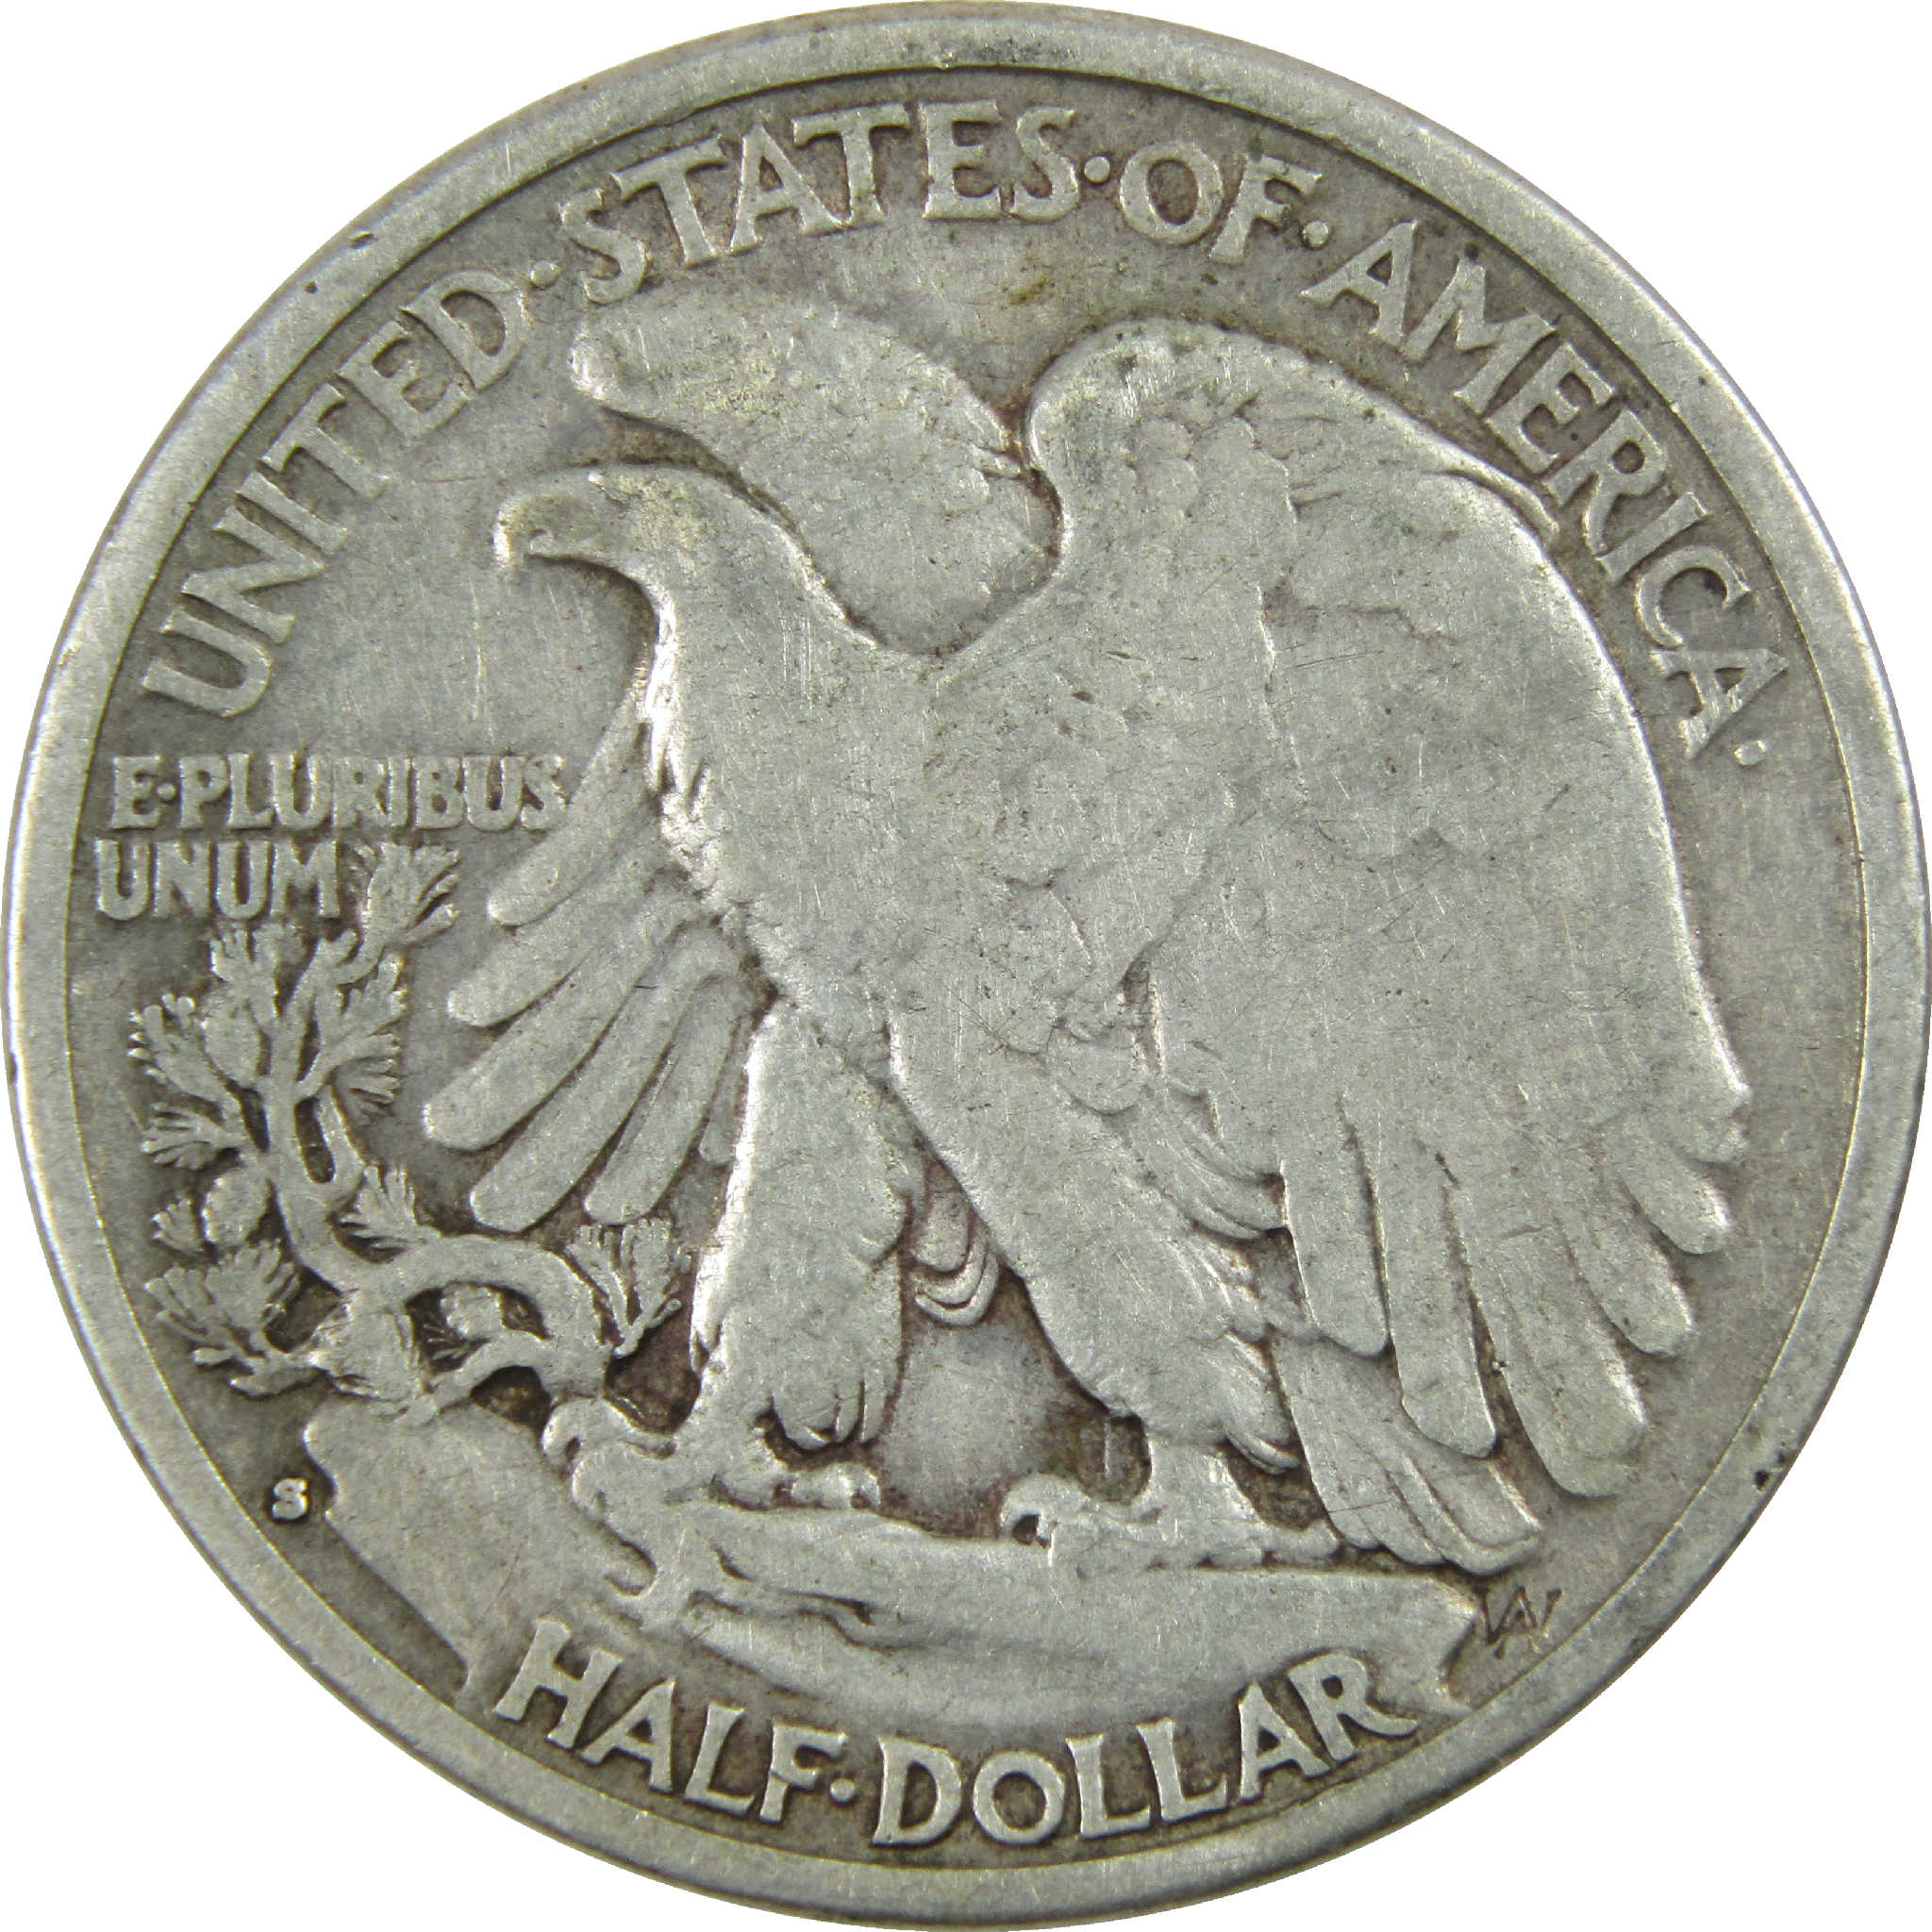 1934 S Liberty Walking Half Dollar F Fine Silver 50c Coin SKU:I12297